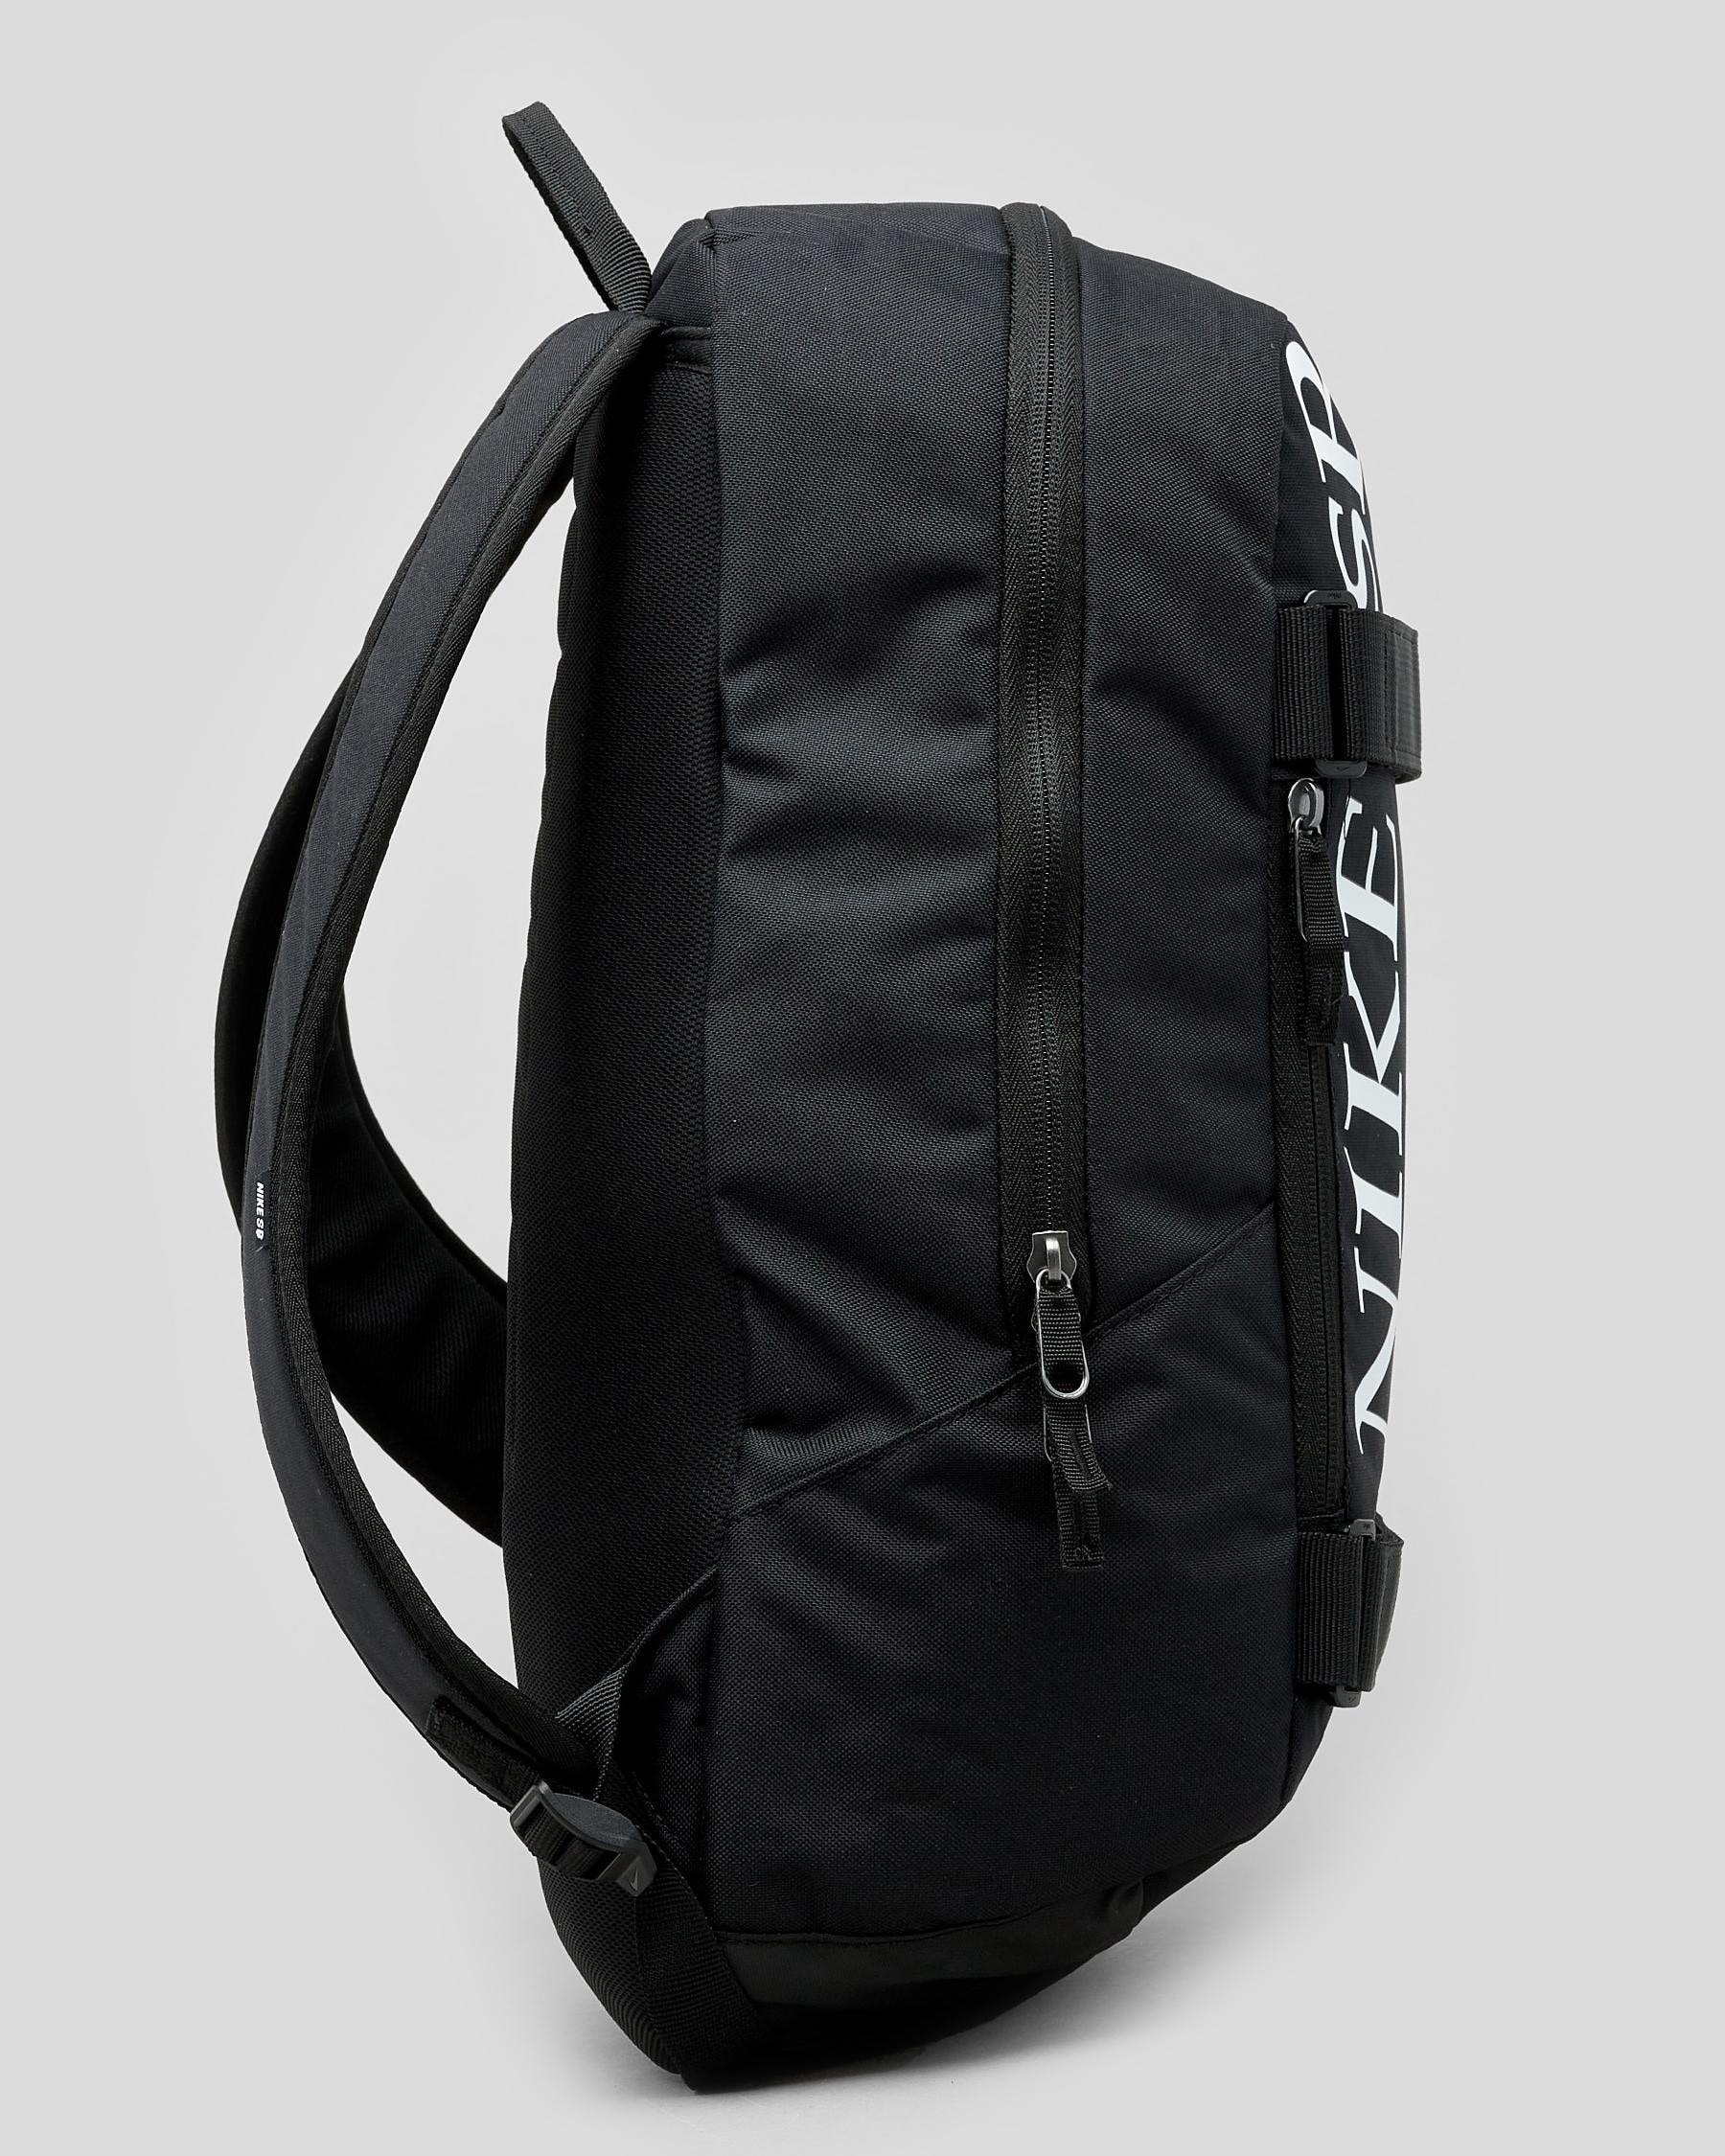 mendigo Tener cuidado Dependiente Nike SB Courthouse Backpack In Black/white - Fast Shipping & Easy Returns -  City Beach United States